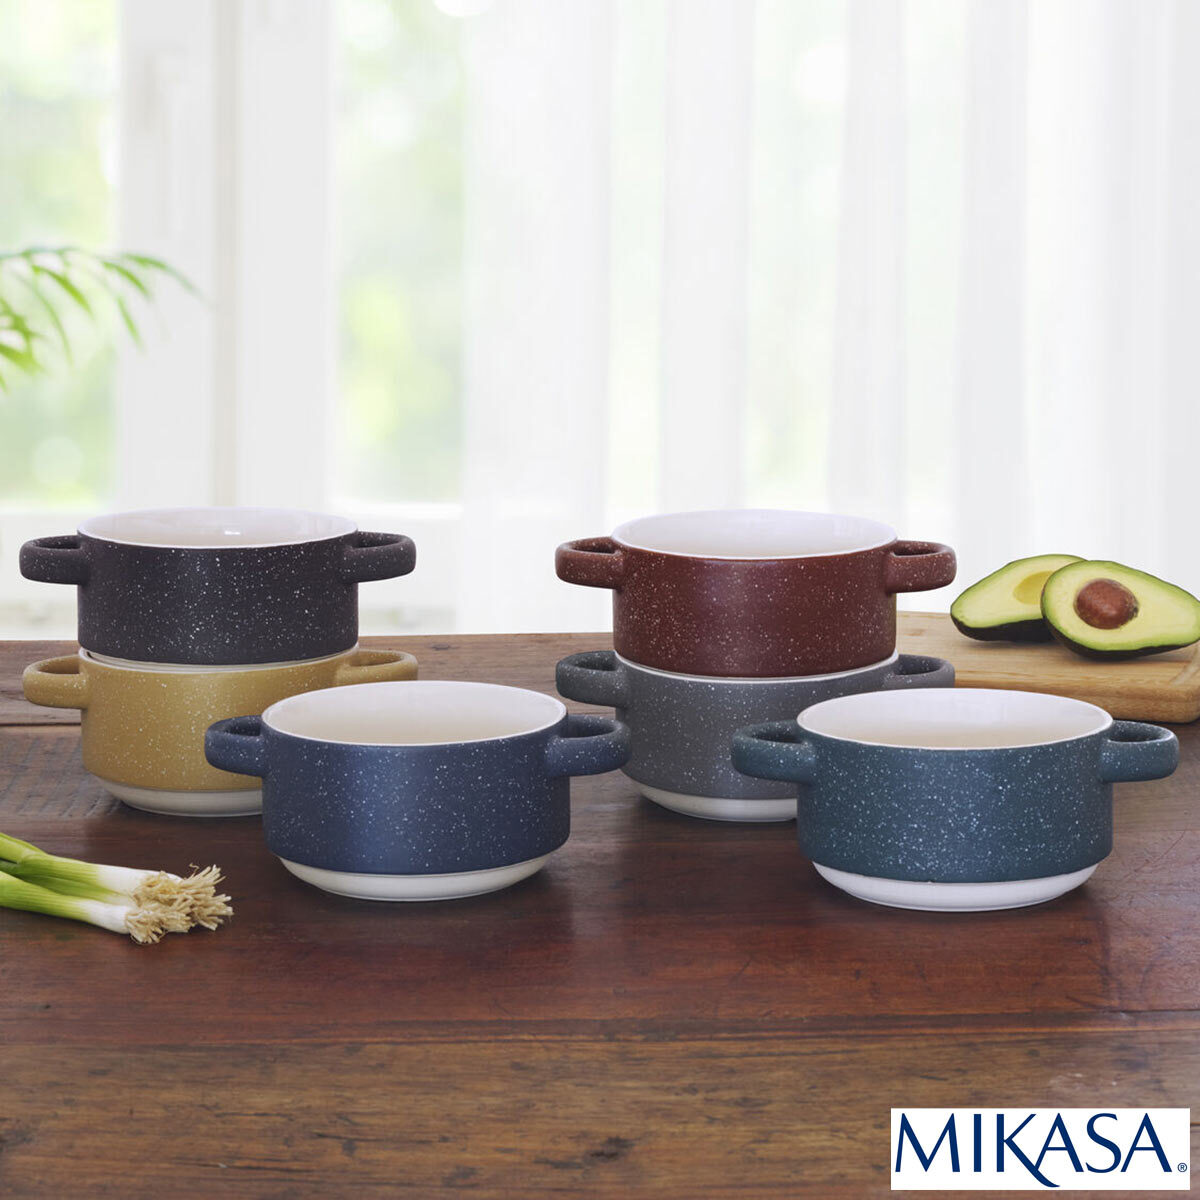 Mikasa Avignon Stoneware Soup Bowls, 6 Pack